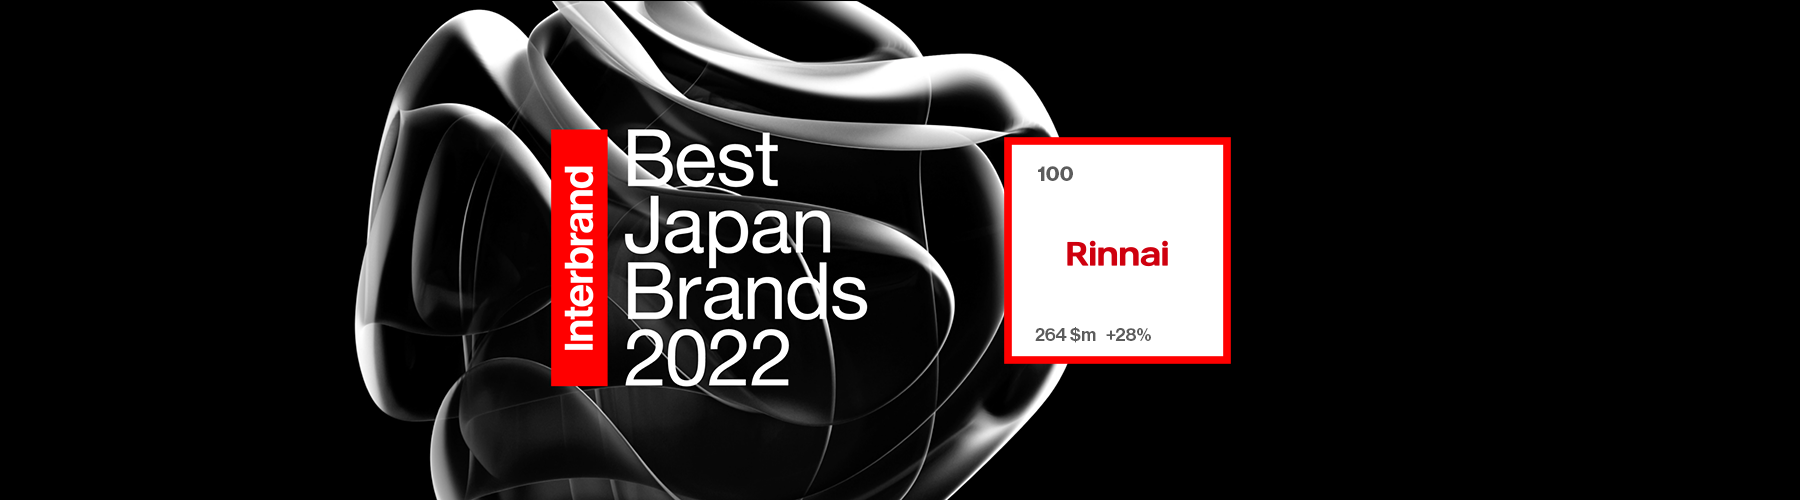 Rinnai_Blog_Header-BestJapanBrand-2022